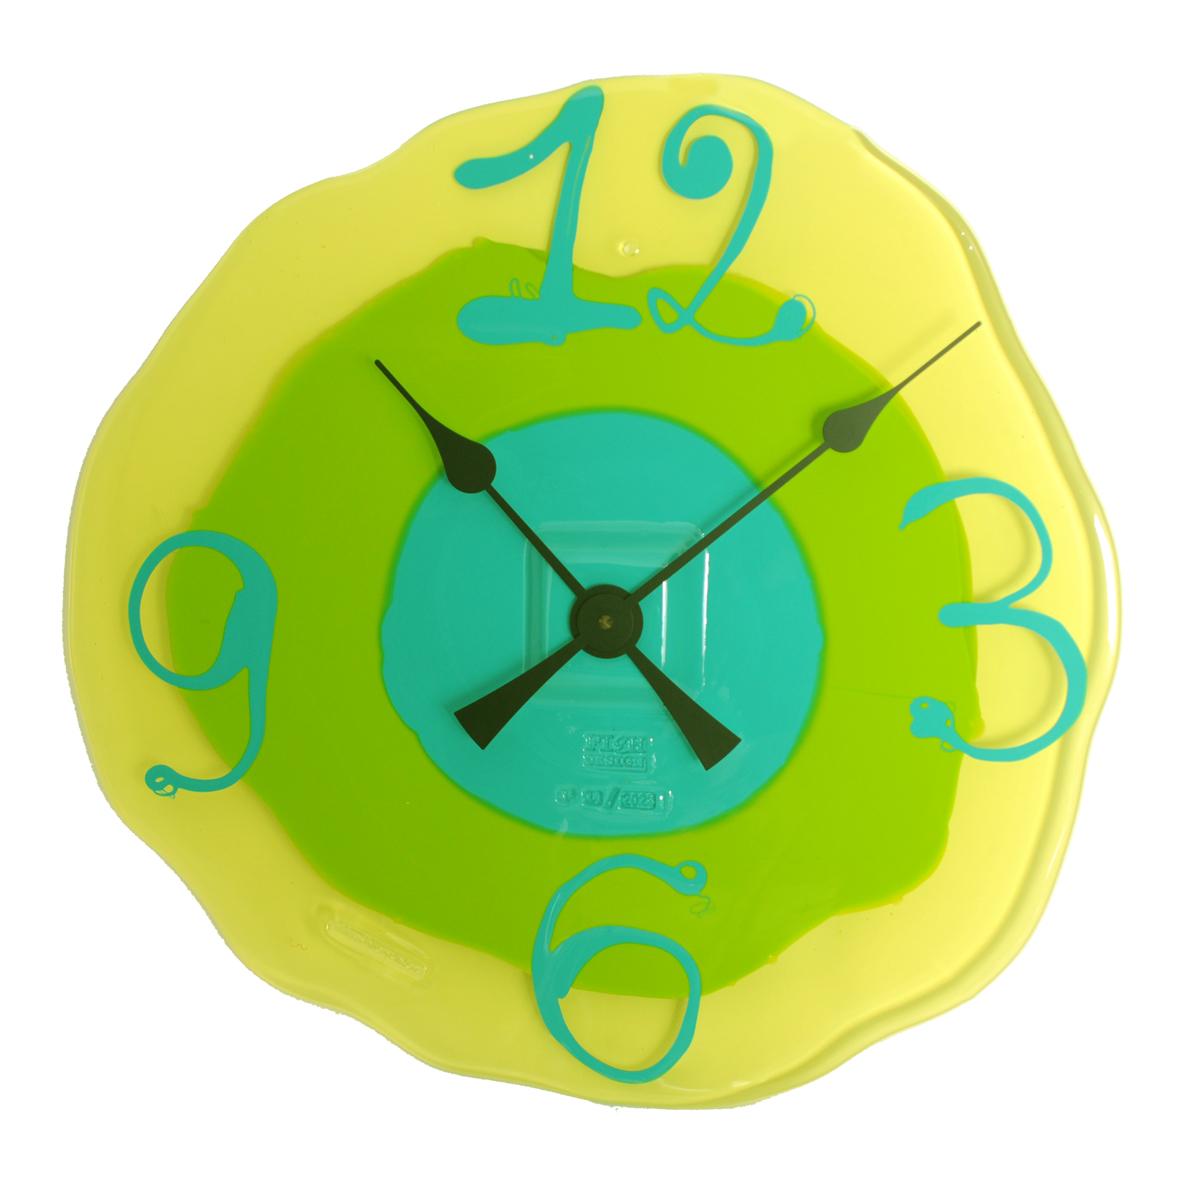 Italian Watch Me Clock Large Clear Yellow Matt Lime Matt Turquoise by Gaetano Pesce For Sale